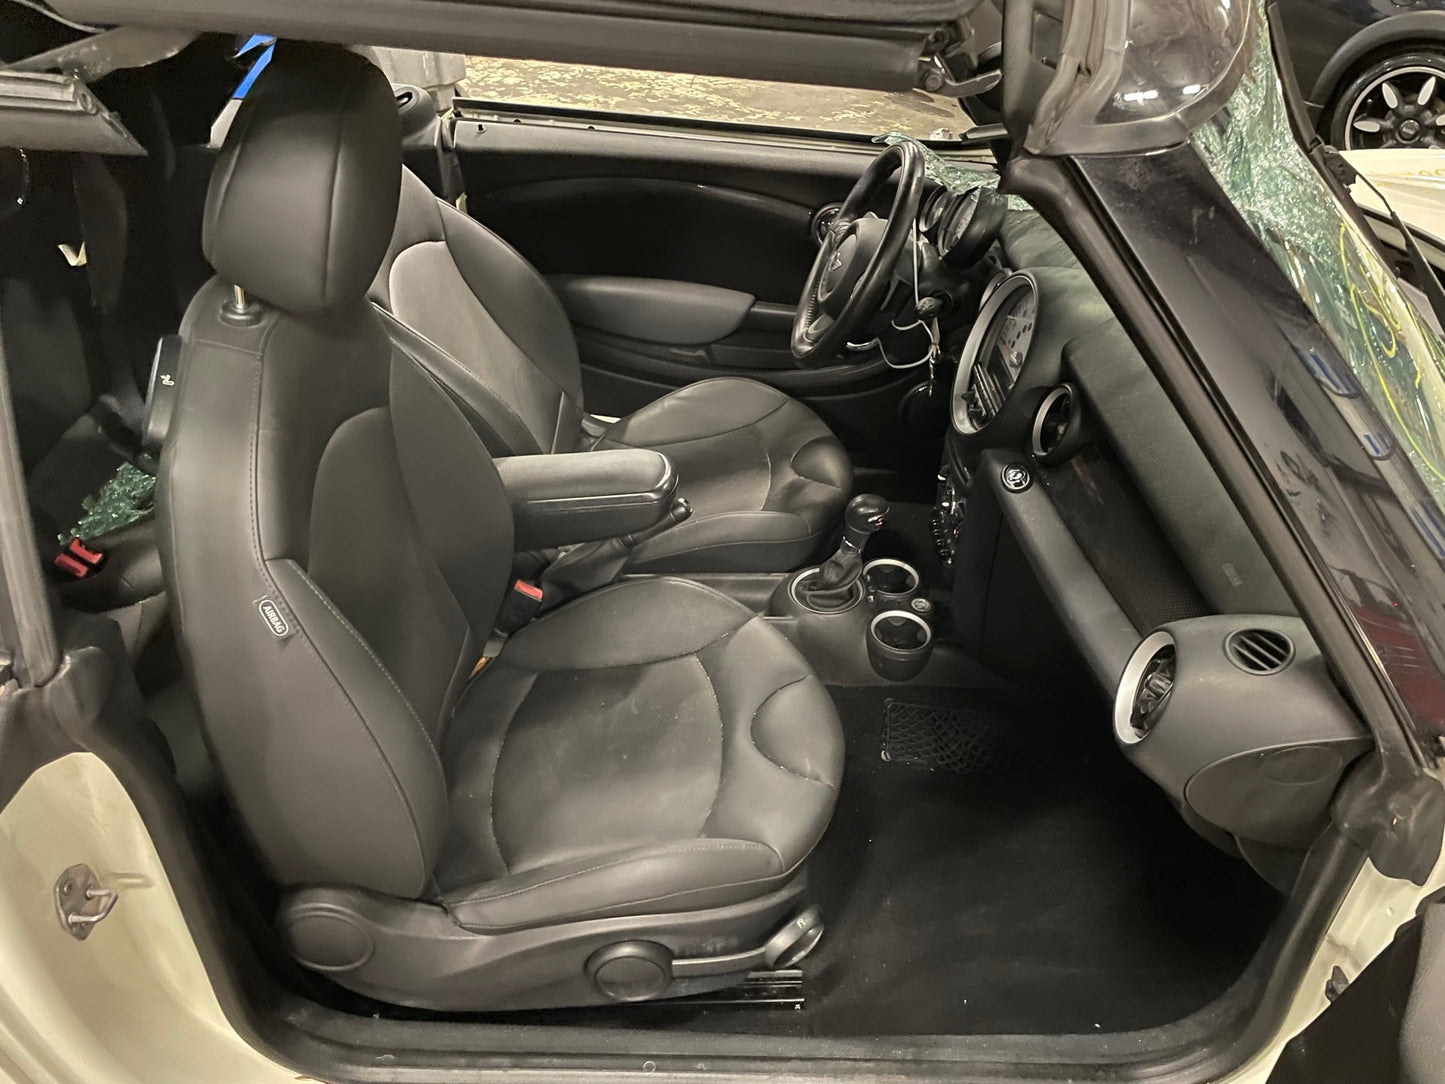 2011 MINI Cooper Convertible S, New Parts Car (February 2022) Stk #280